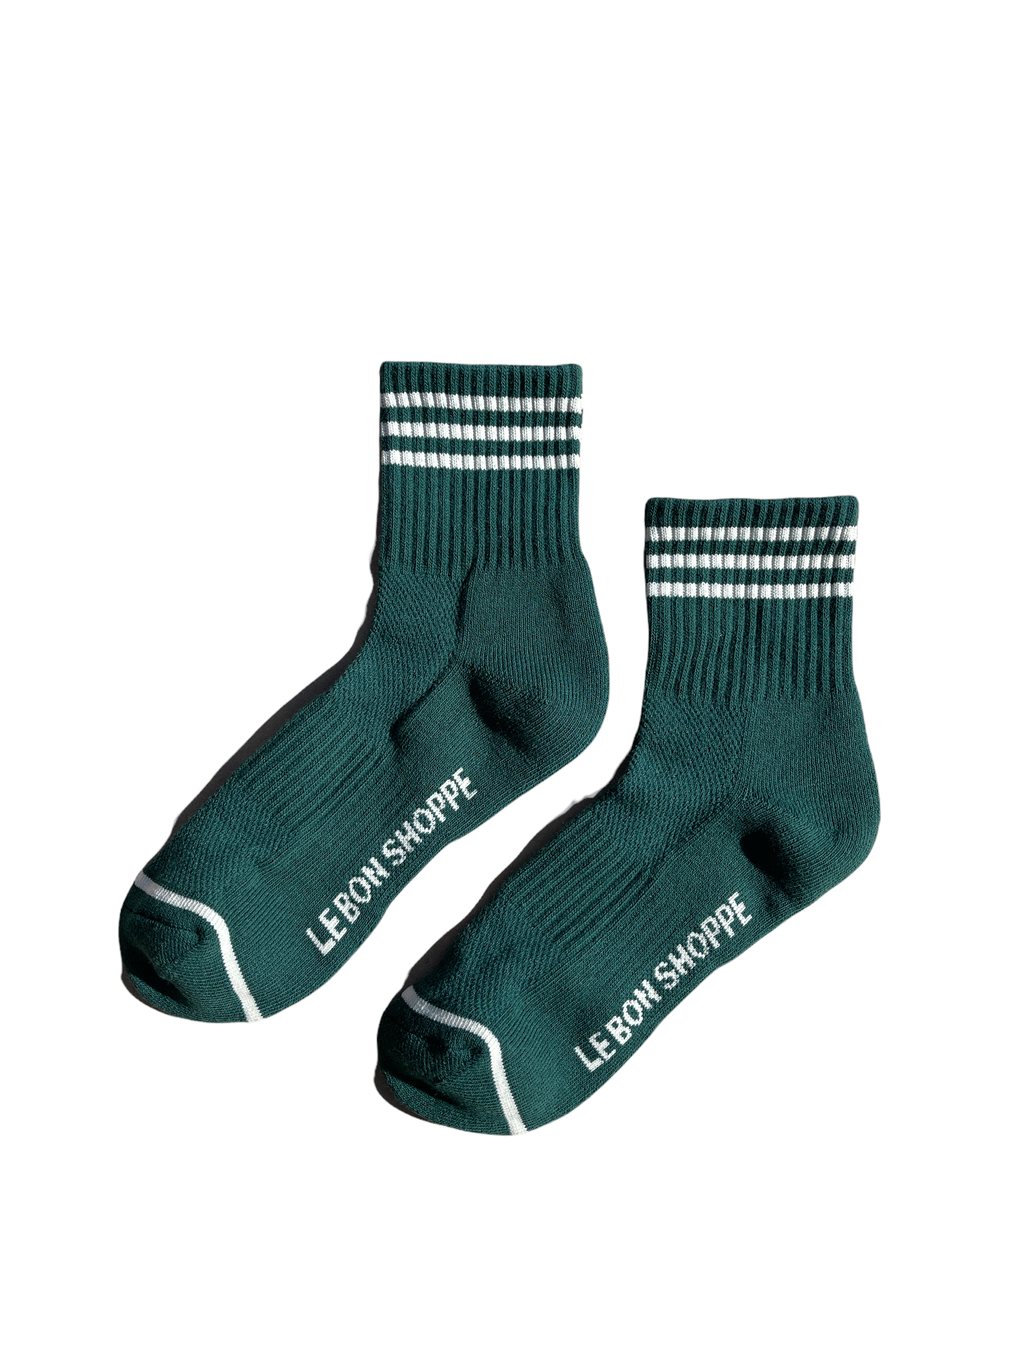 Le Bon Shoppe Girlfriend Socks - Hunter Green